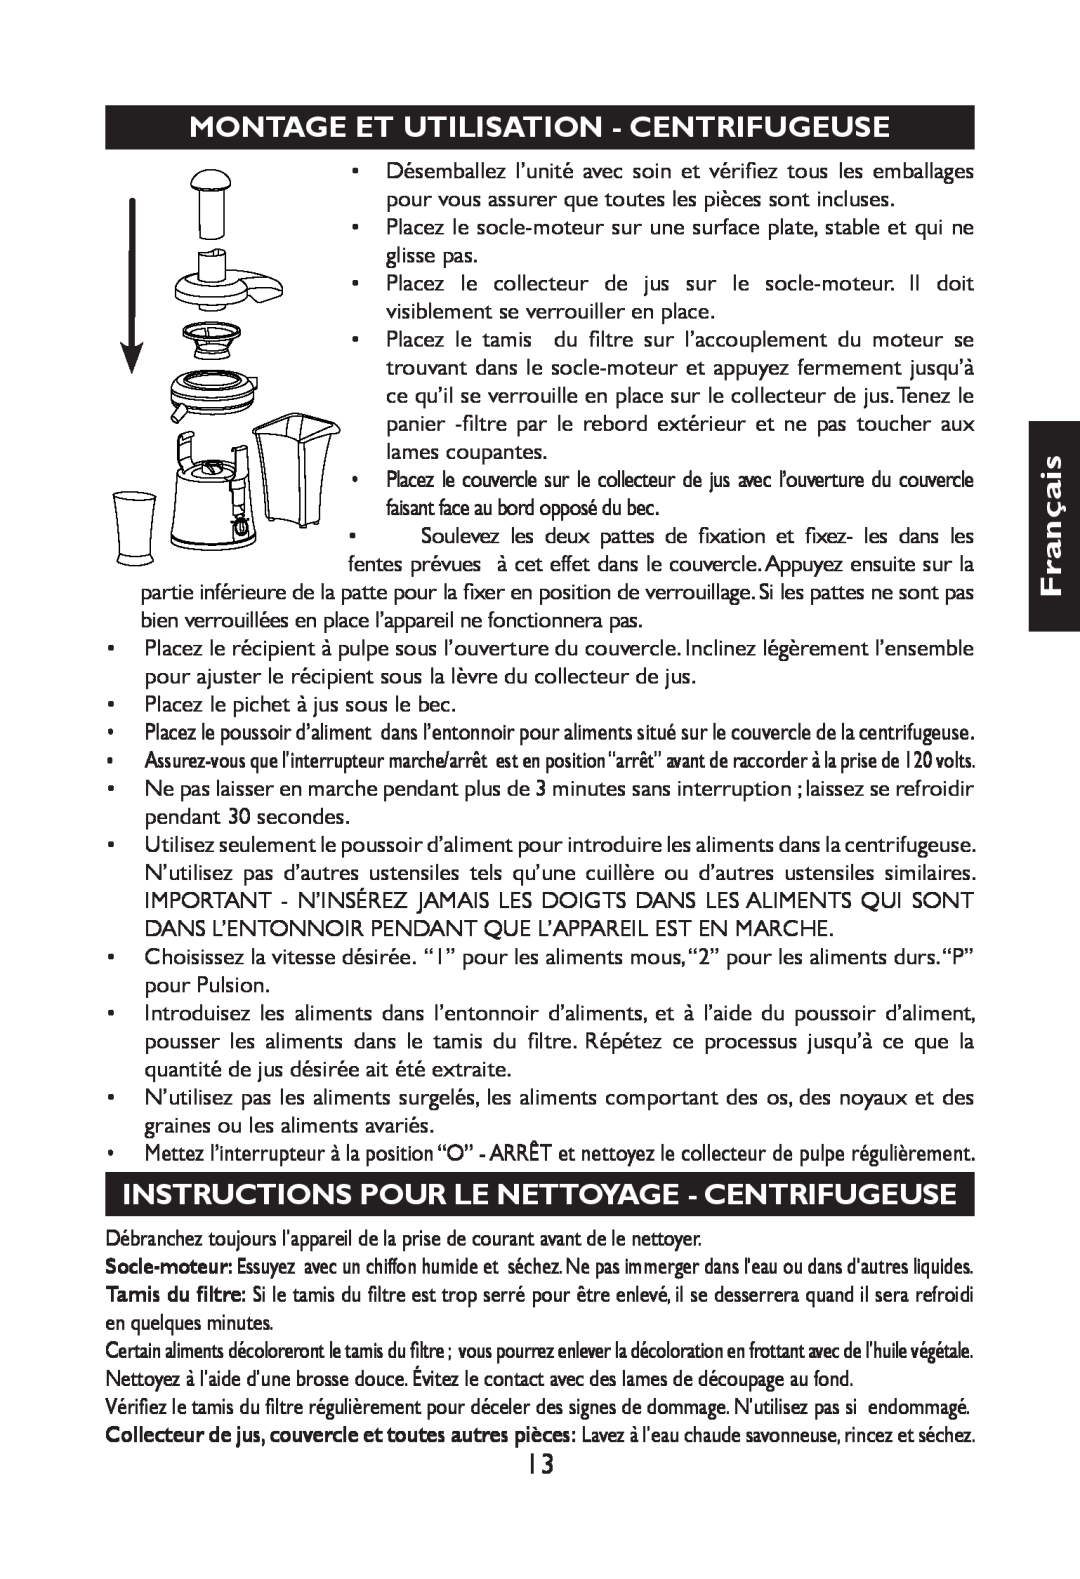 Nesco JB-50 manual Montage Et Utilisation - Centrifugeuse, Instructions Pour Le Nettoyage - Centrifugeuse, Français 